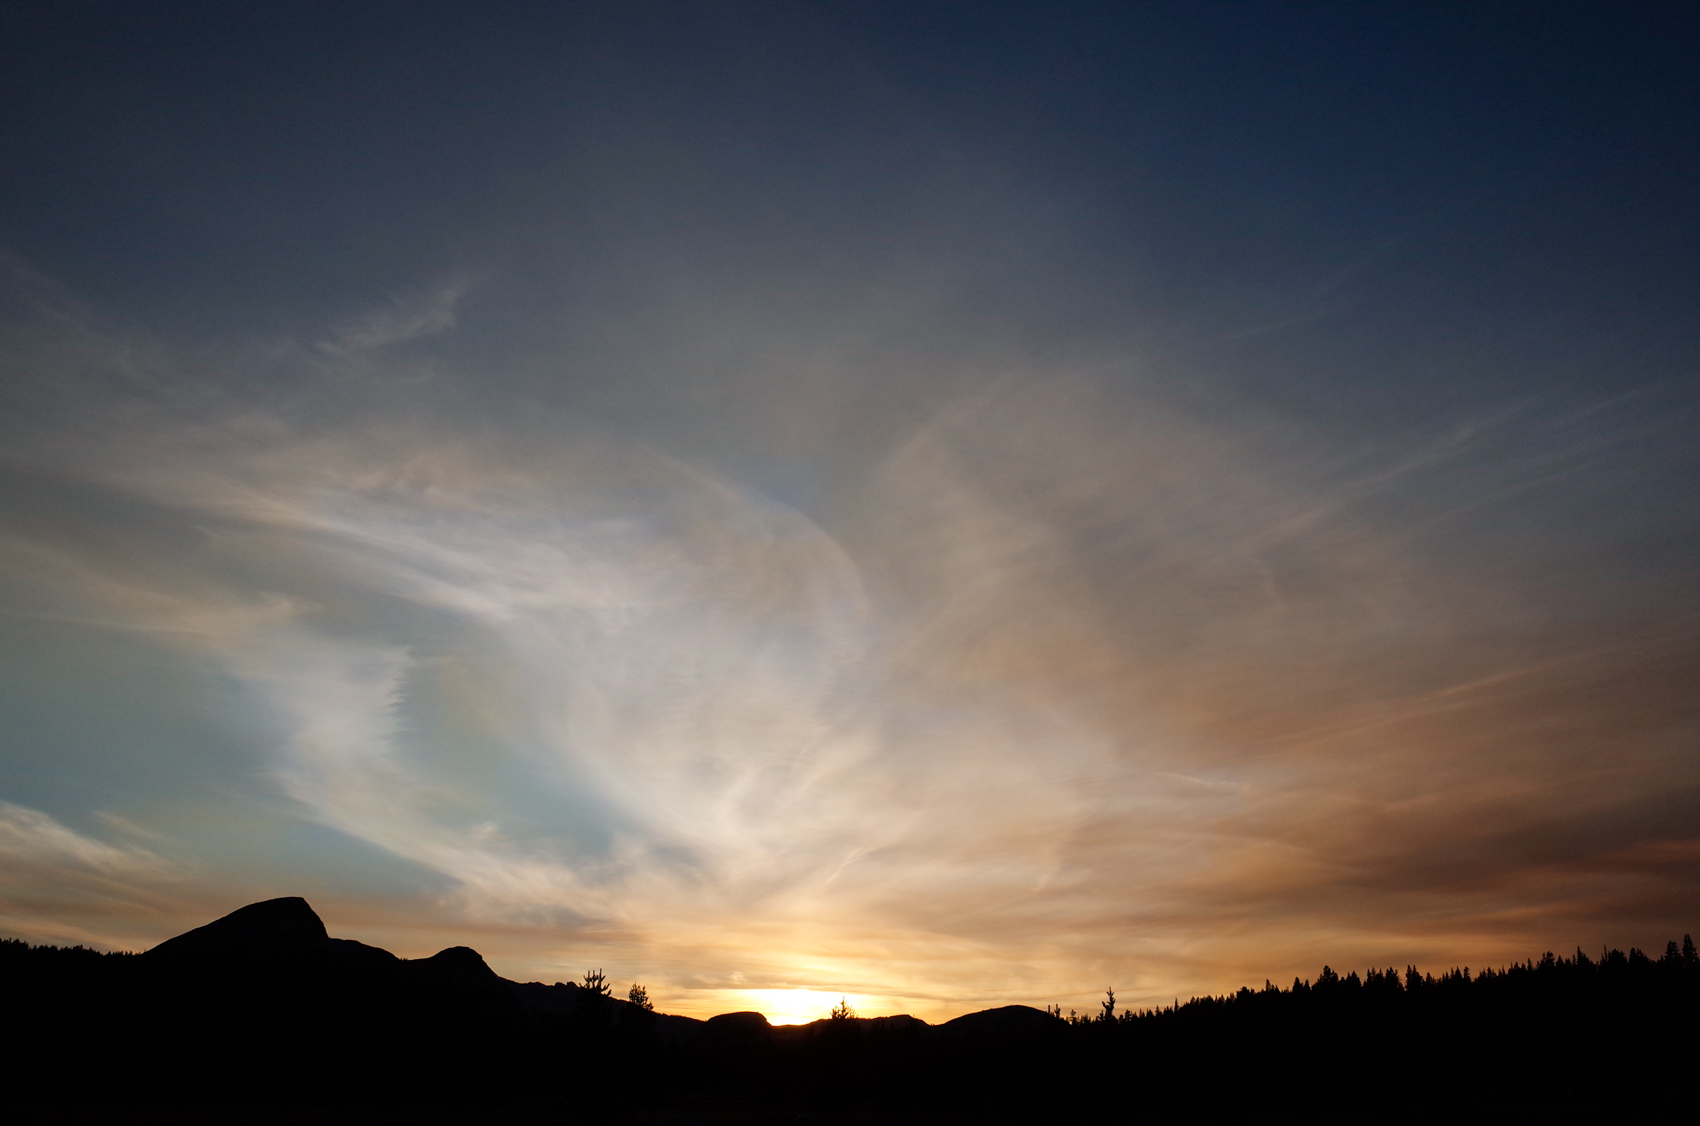  Sunset at Tuolumne Meadows. Yosemite National Park, California. August 2015. 